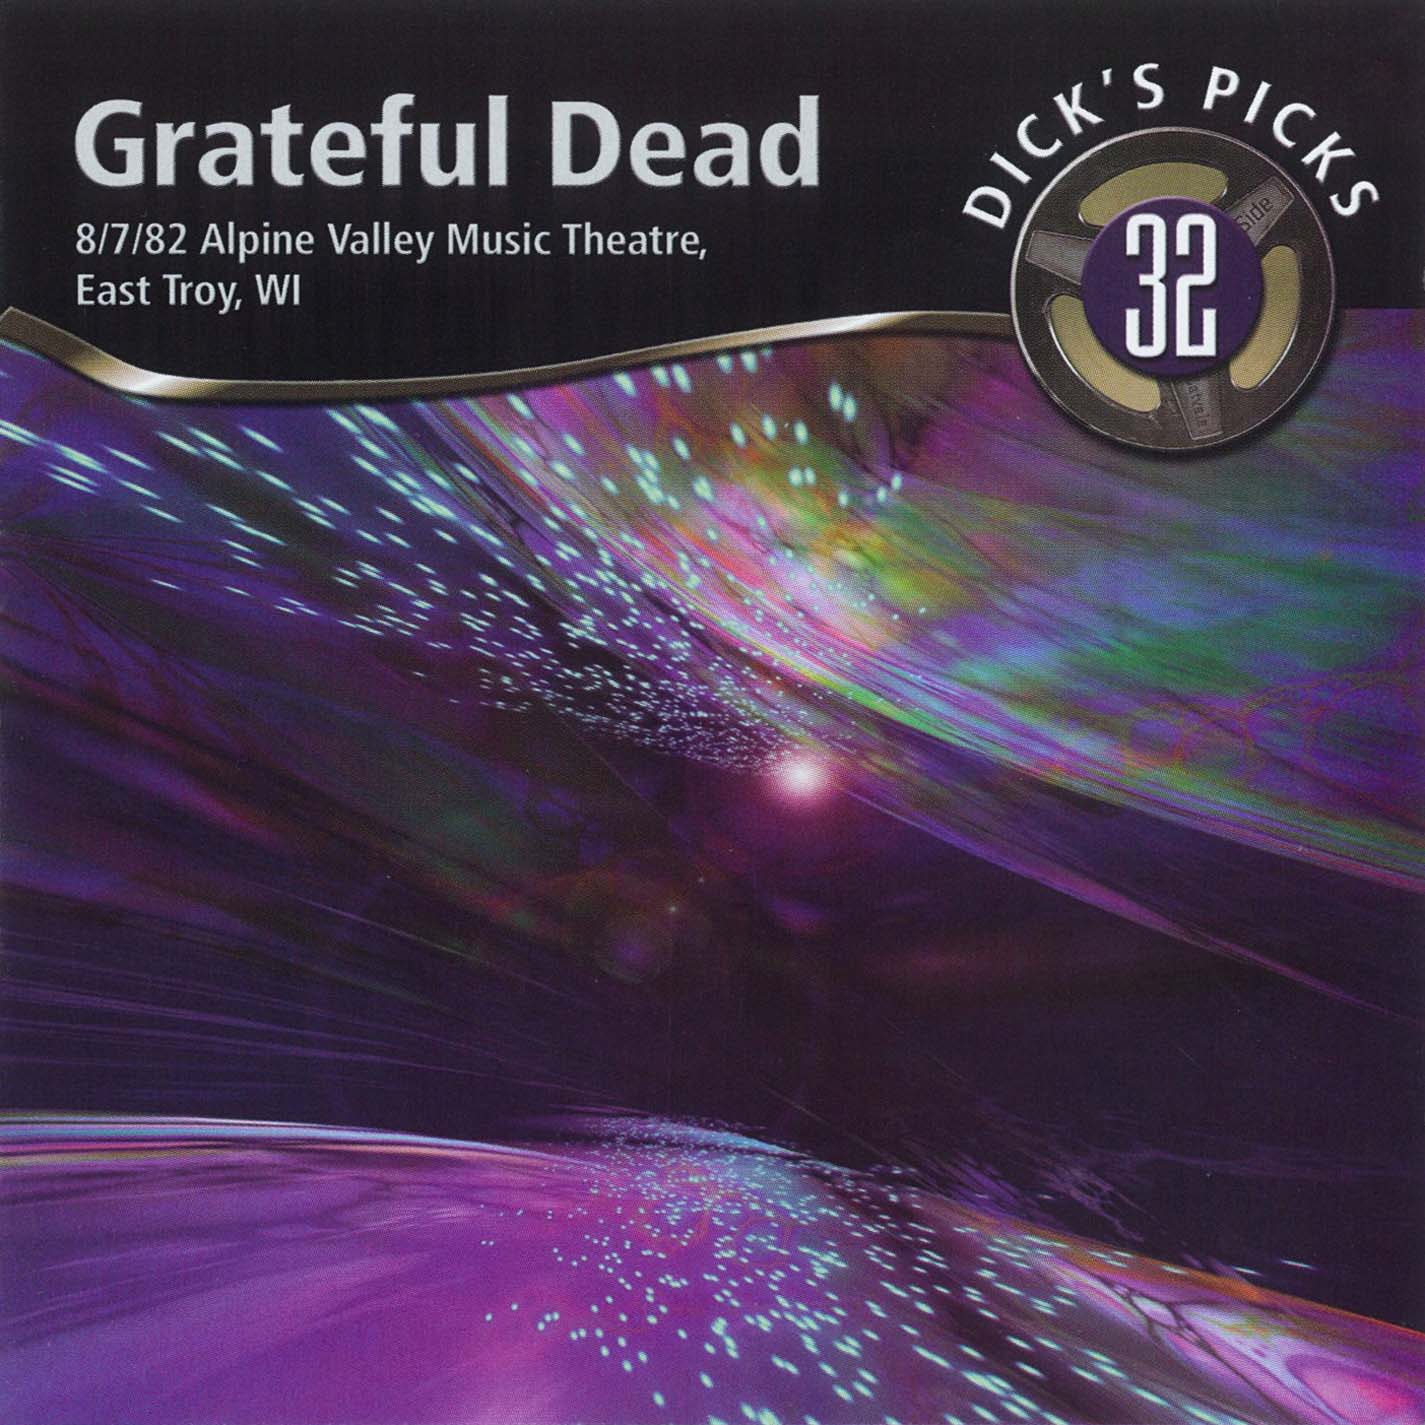 Grateful Dead Dick's Picks 32 album cover artwork